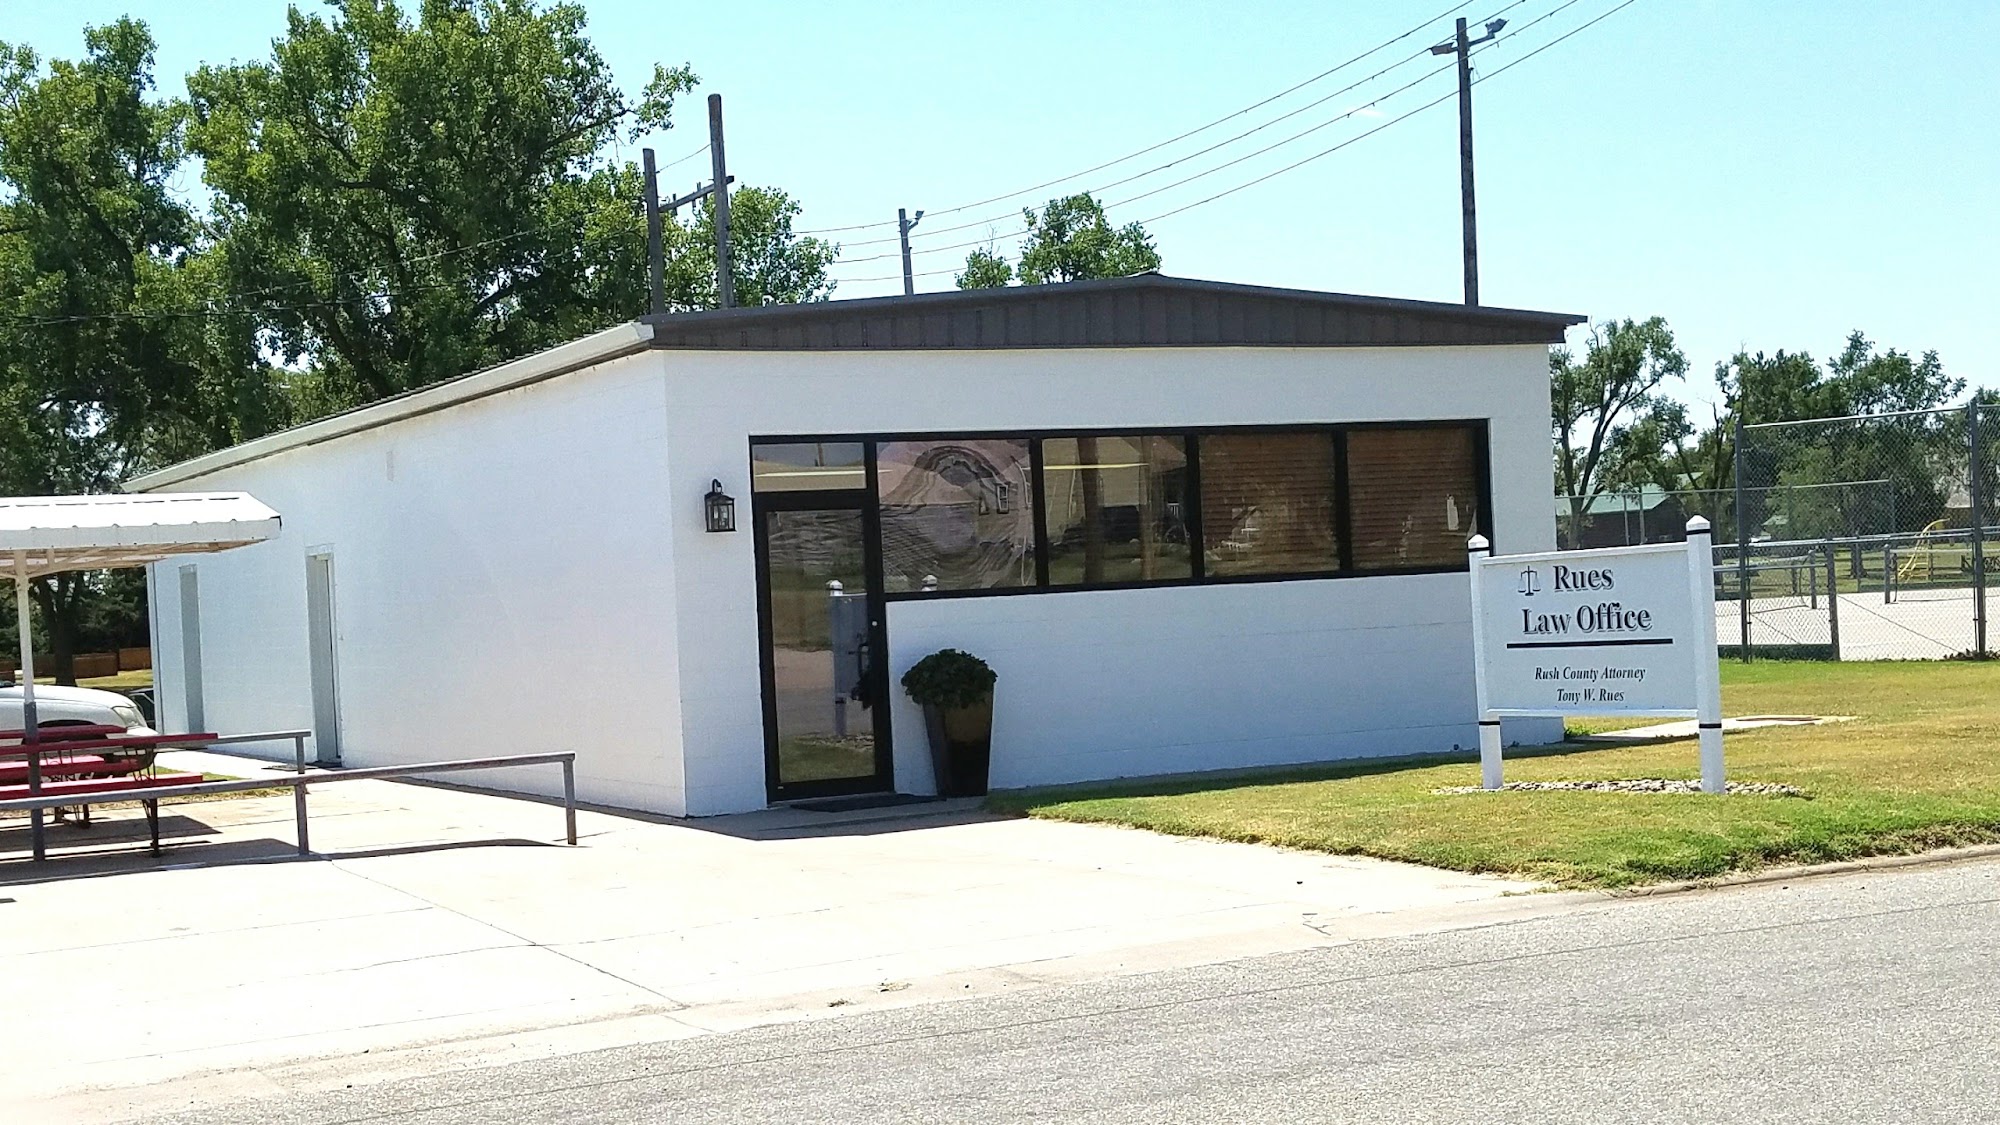 Tony Rues Law Office Grass Park, 111 3rd St, La Crosse Kansas 67548